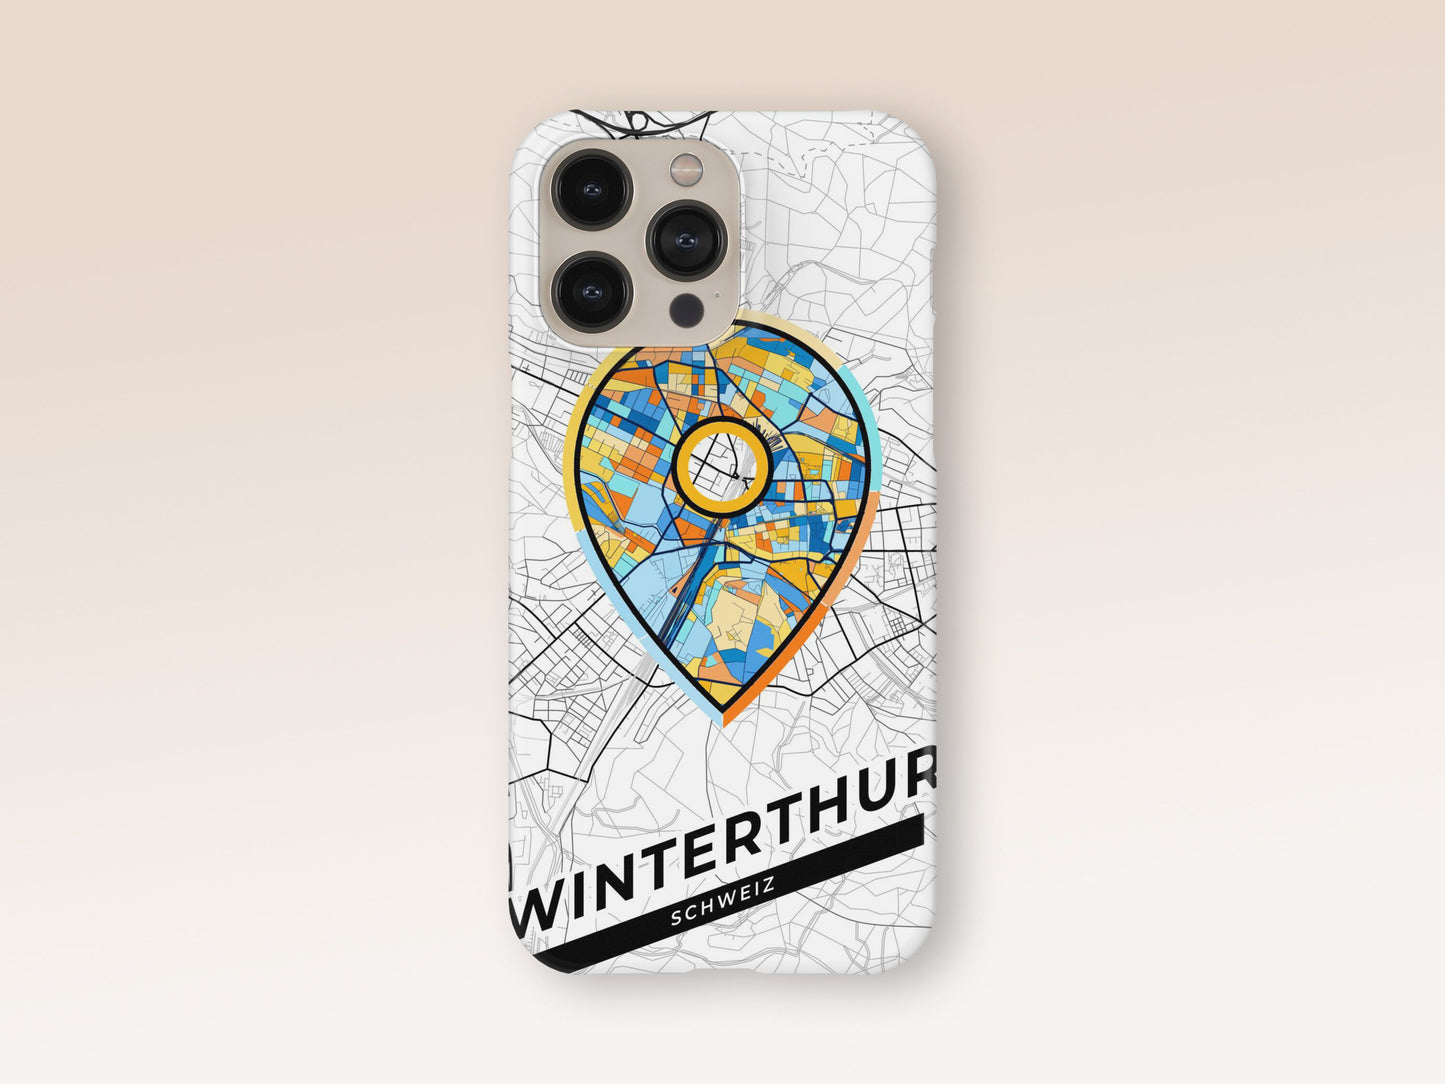 Winterthur Switzerland slim phone case with colorful icon 1